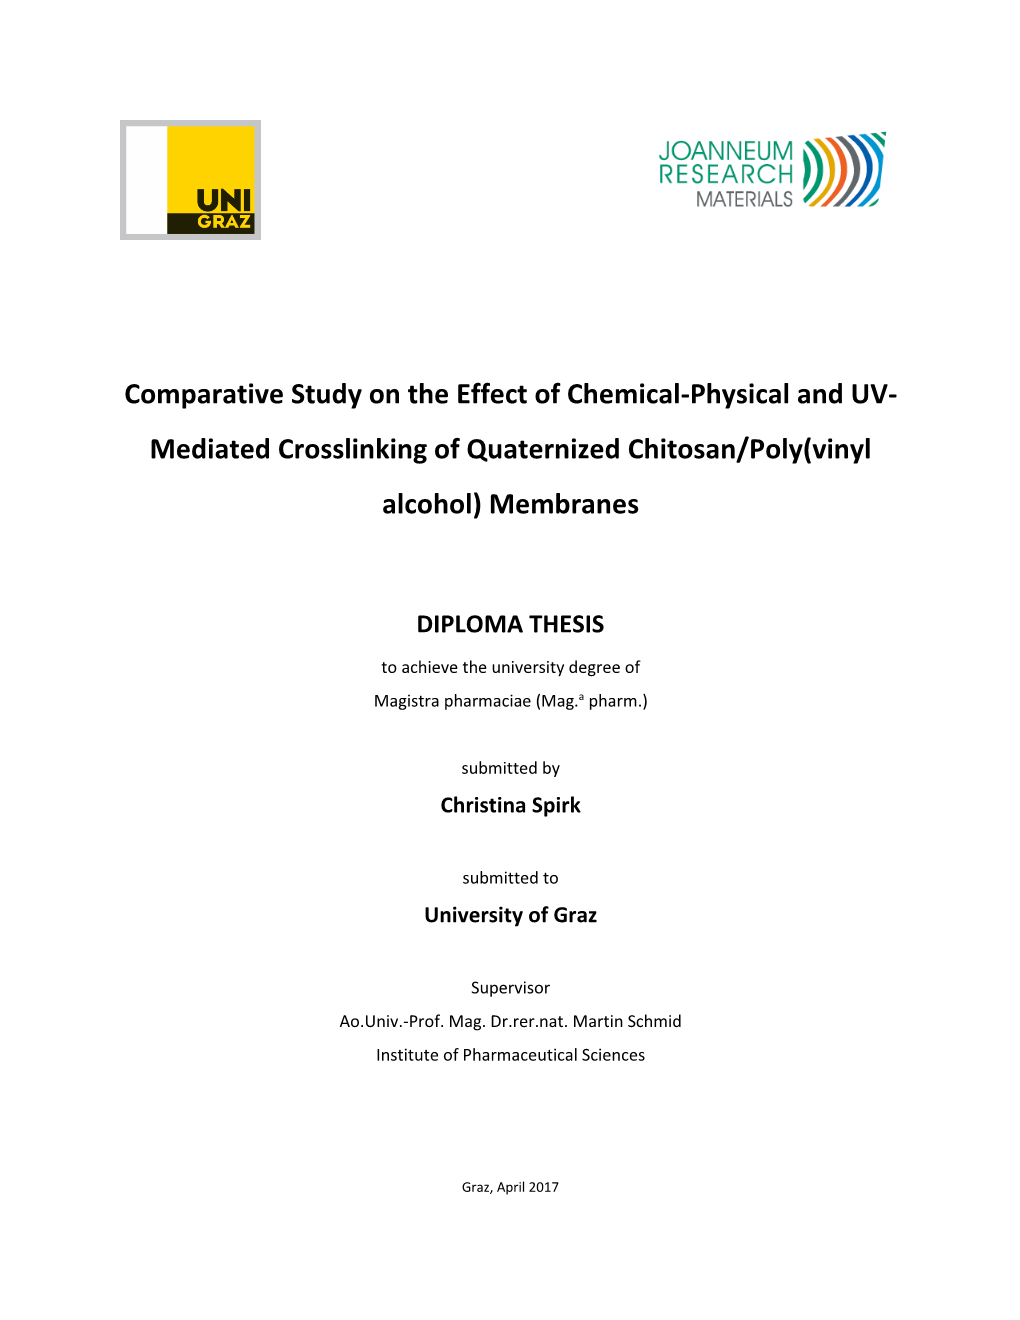 Mediated Crosslinking of Quaternized Chitosan/Poly(Vinyl Alcohol) Membranes